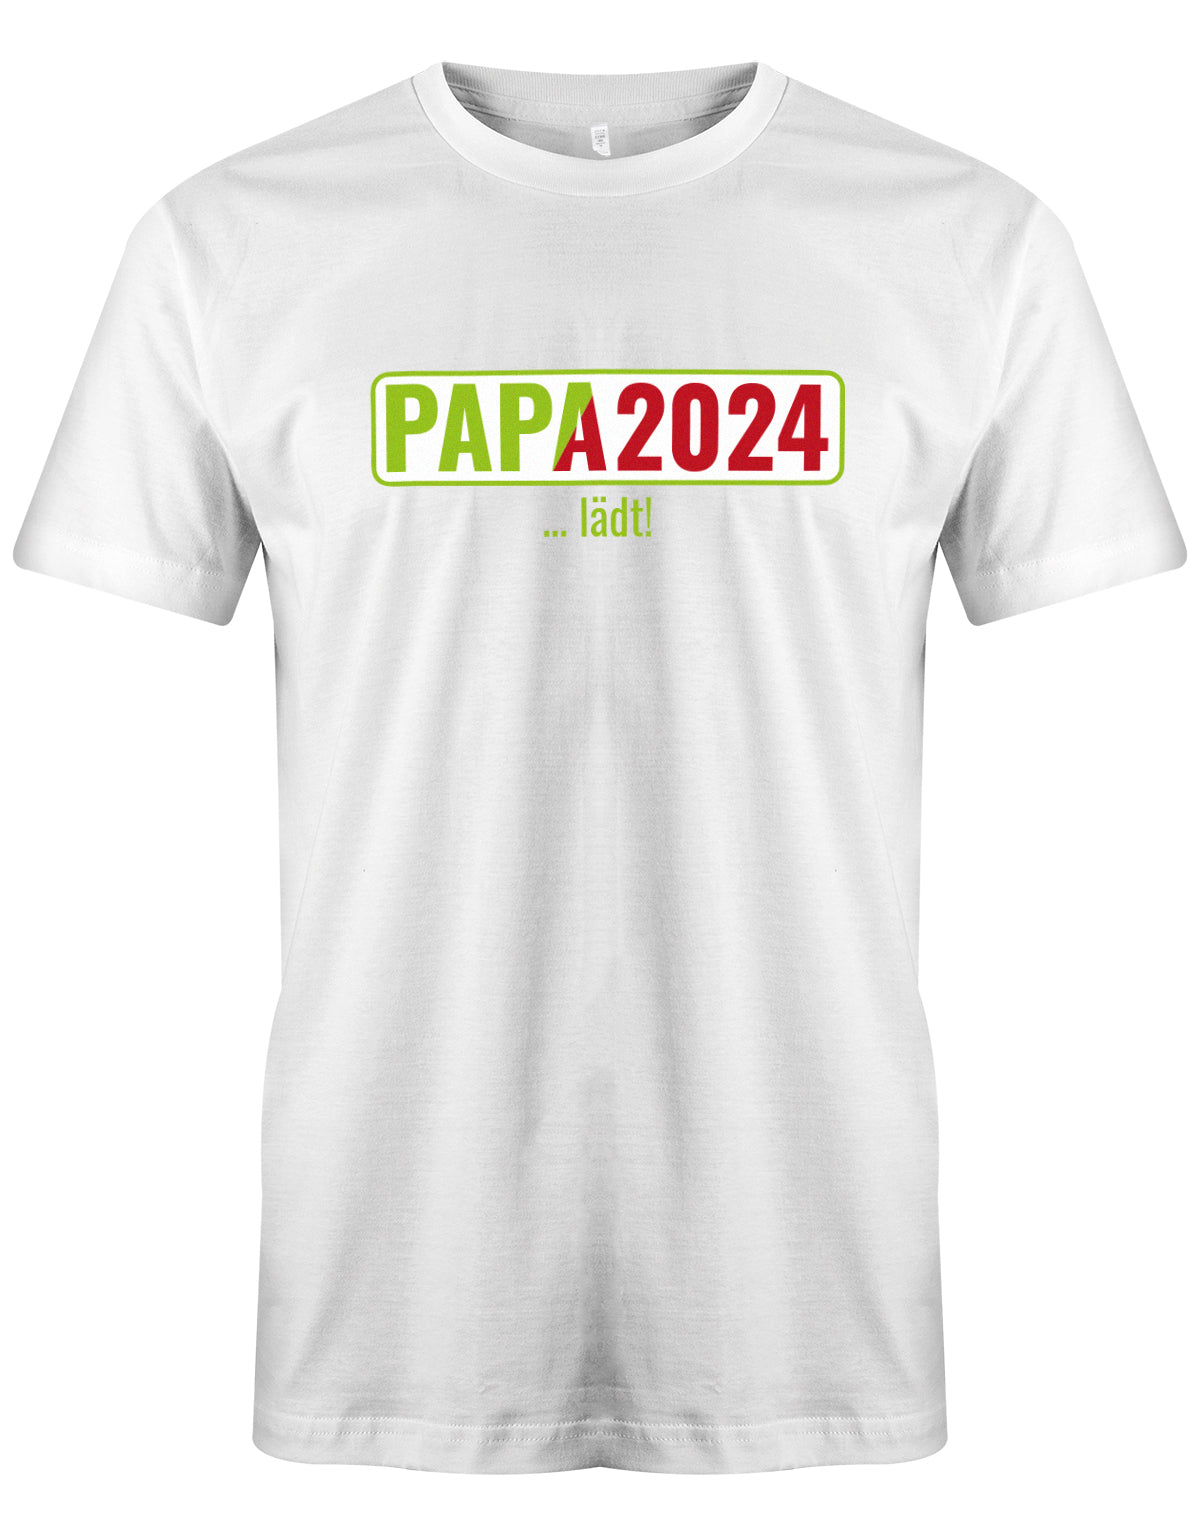 Papa 2024 lädt - loading - Werdender Papa Shirt Herren Weiss